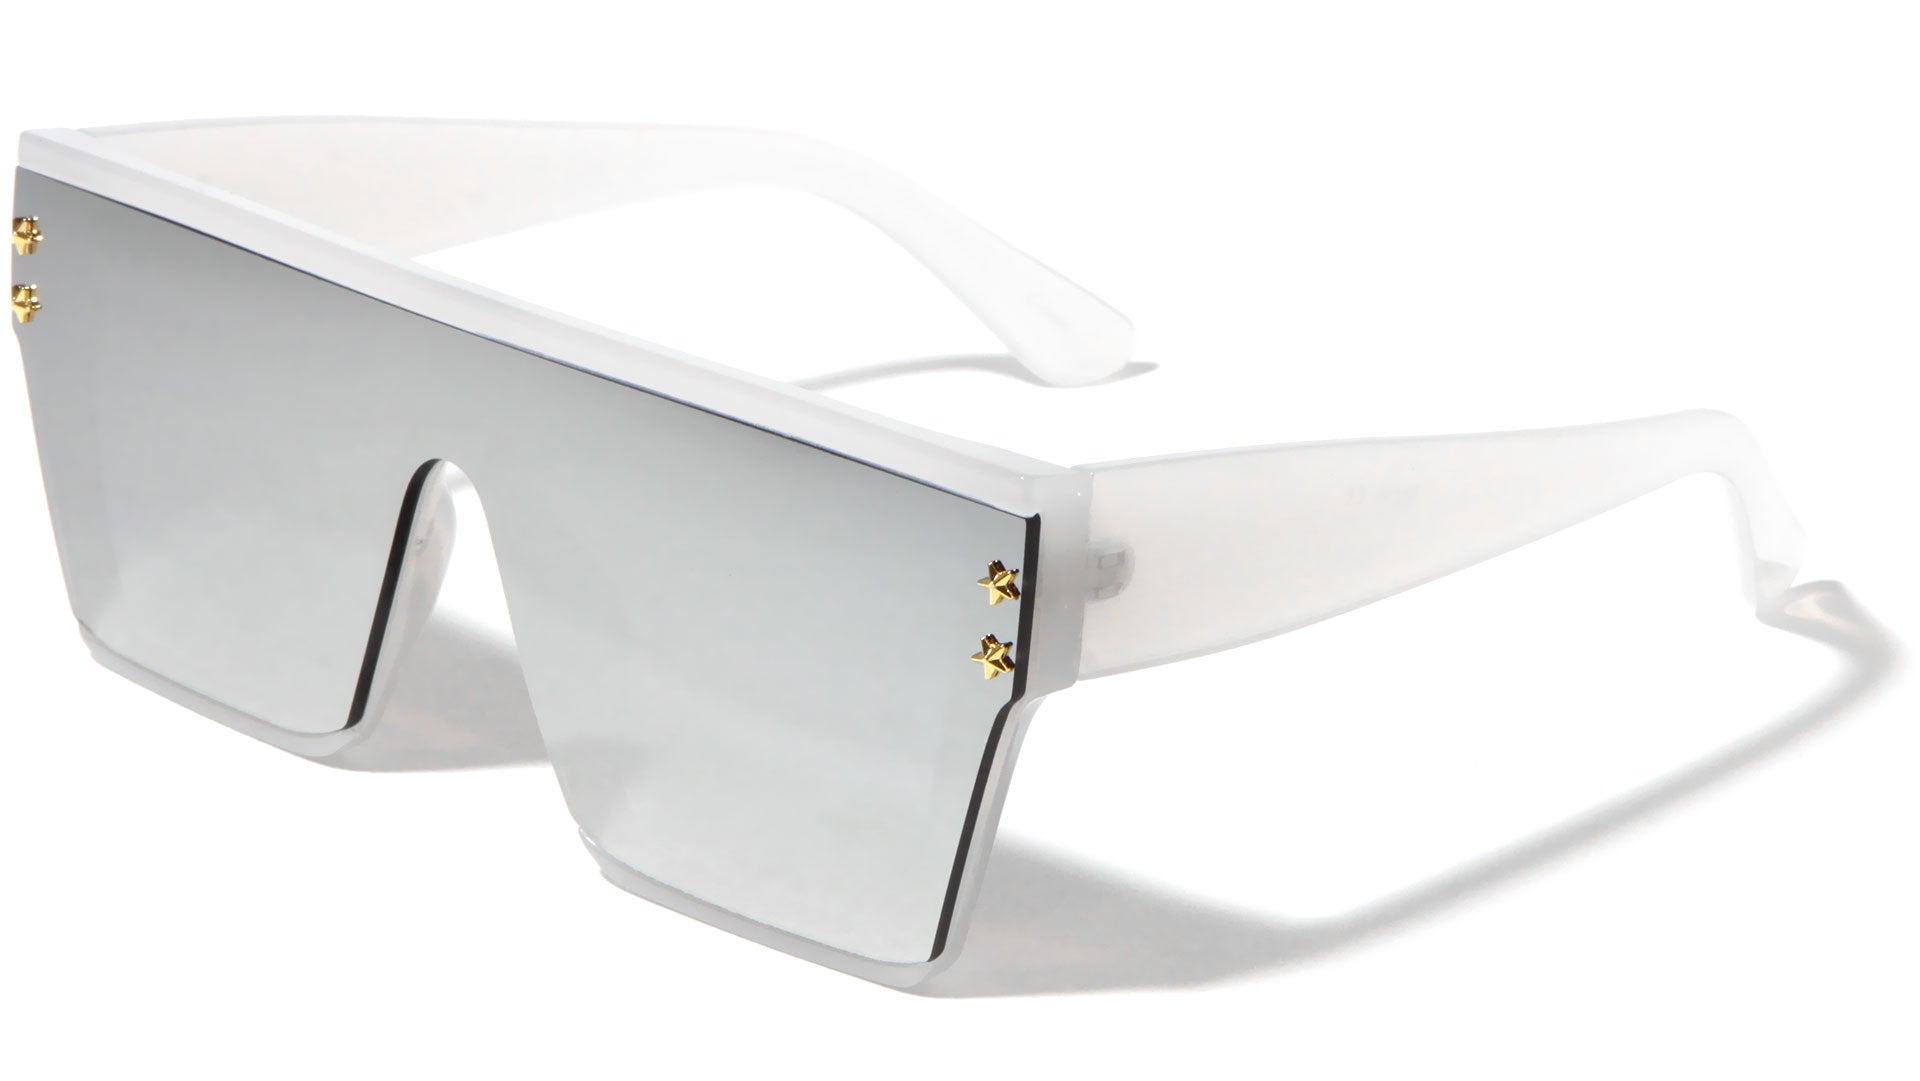 P6558 Flat Top Star Fashion Wholesale Sunglasses - Frontier